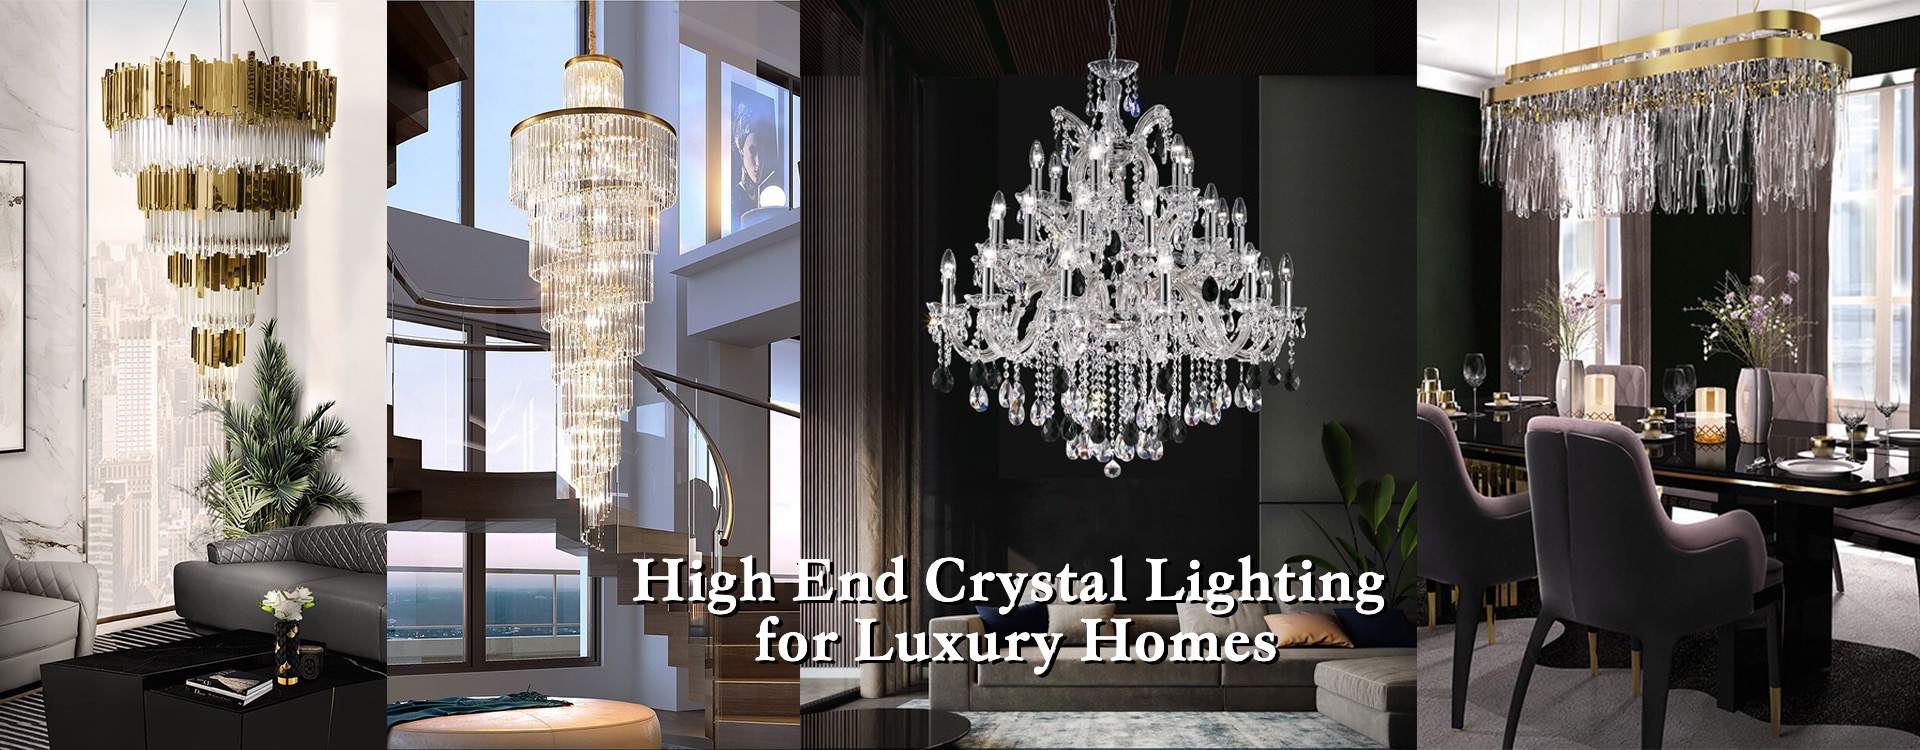 HighEnd Crystal Lighting for Luxury Homes